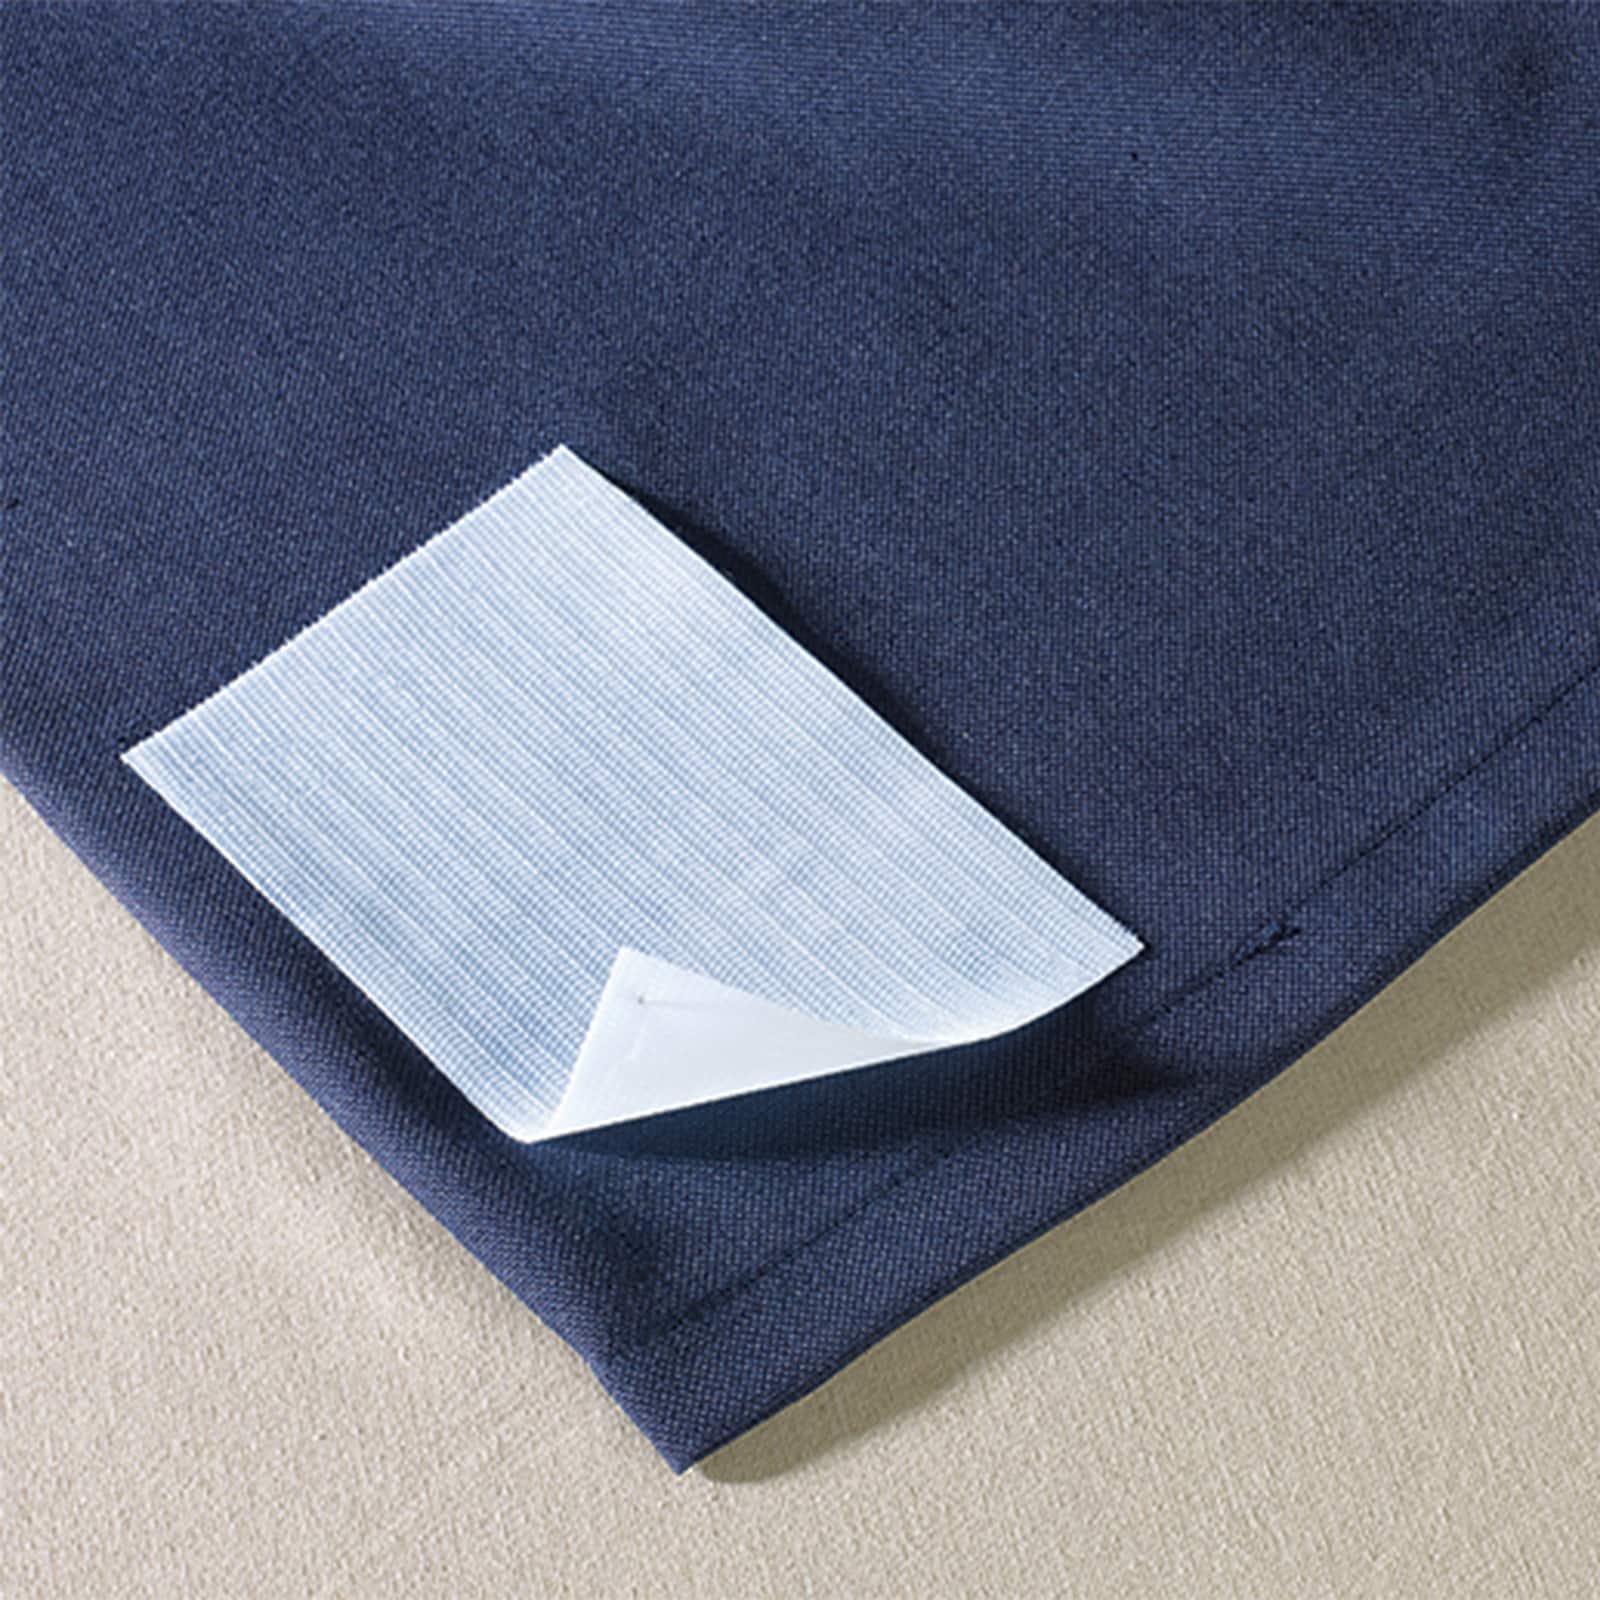 VELCRO® Brand Stick On For Fabrics 19 mm x 60 cm - White